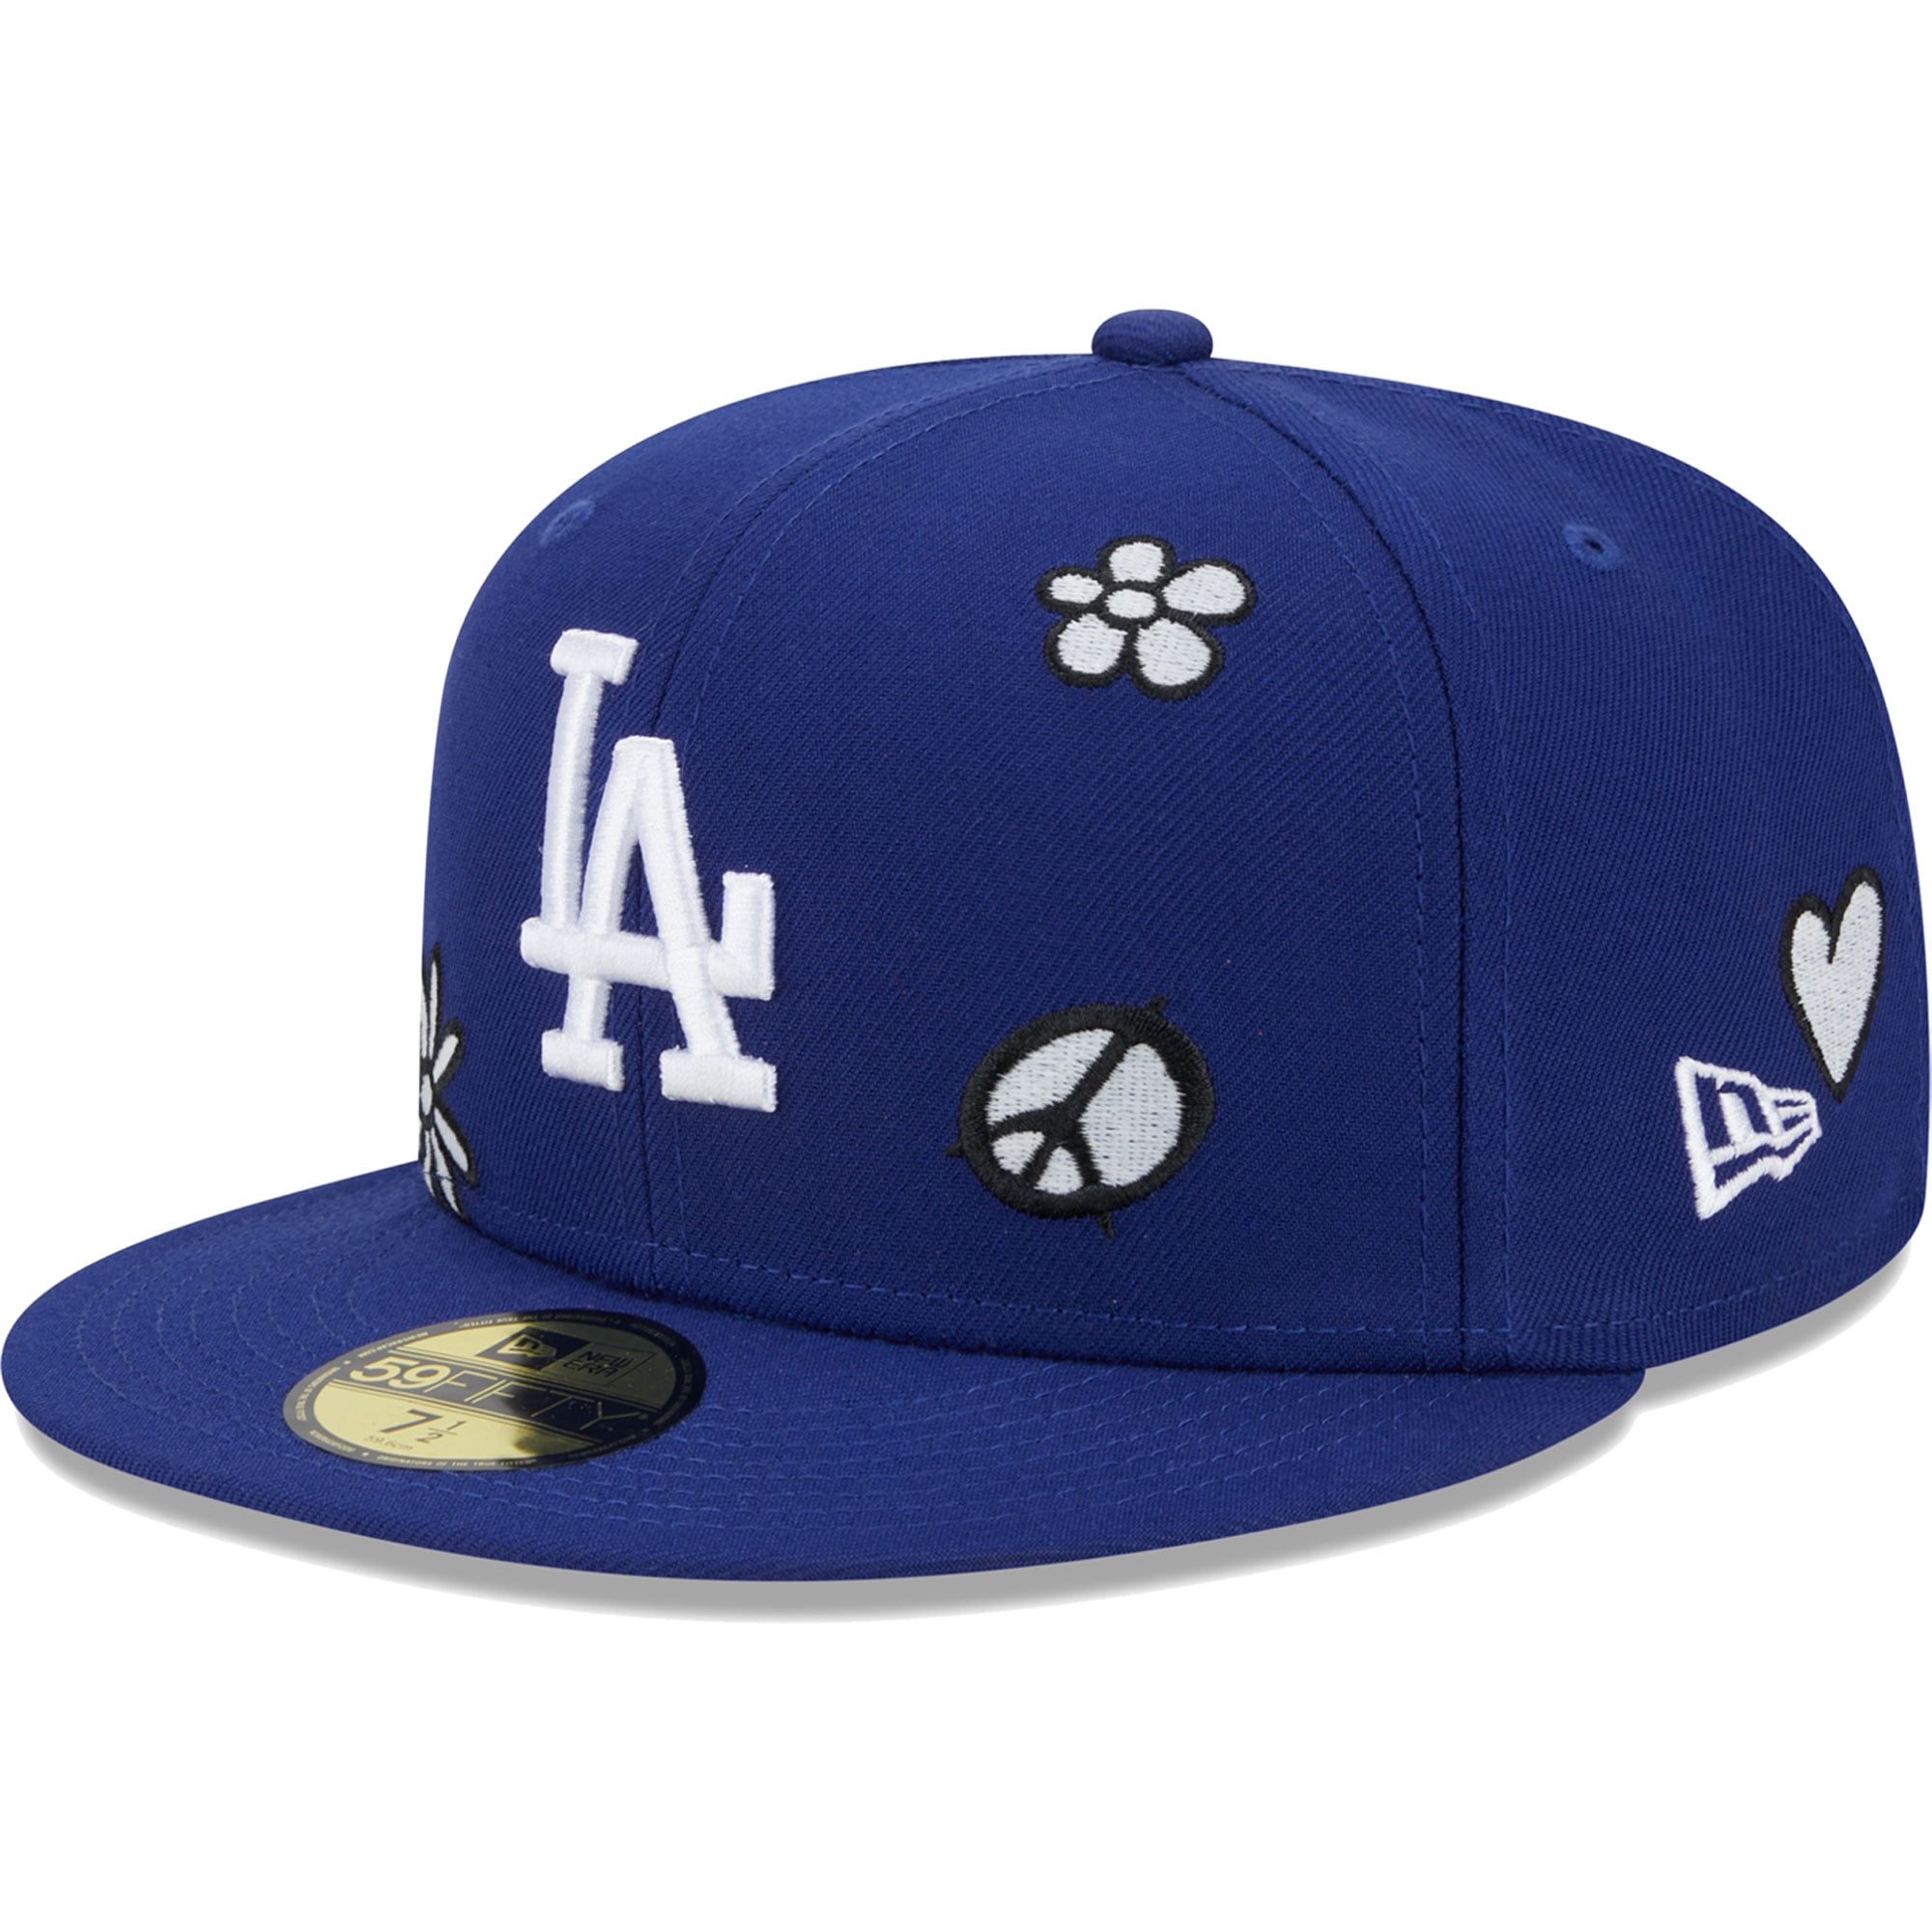 Men's New Era Royal Los Angeles Dodgers Sunlight Pop 59FIFTY